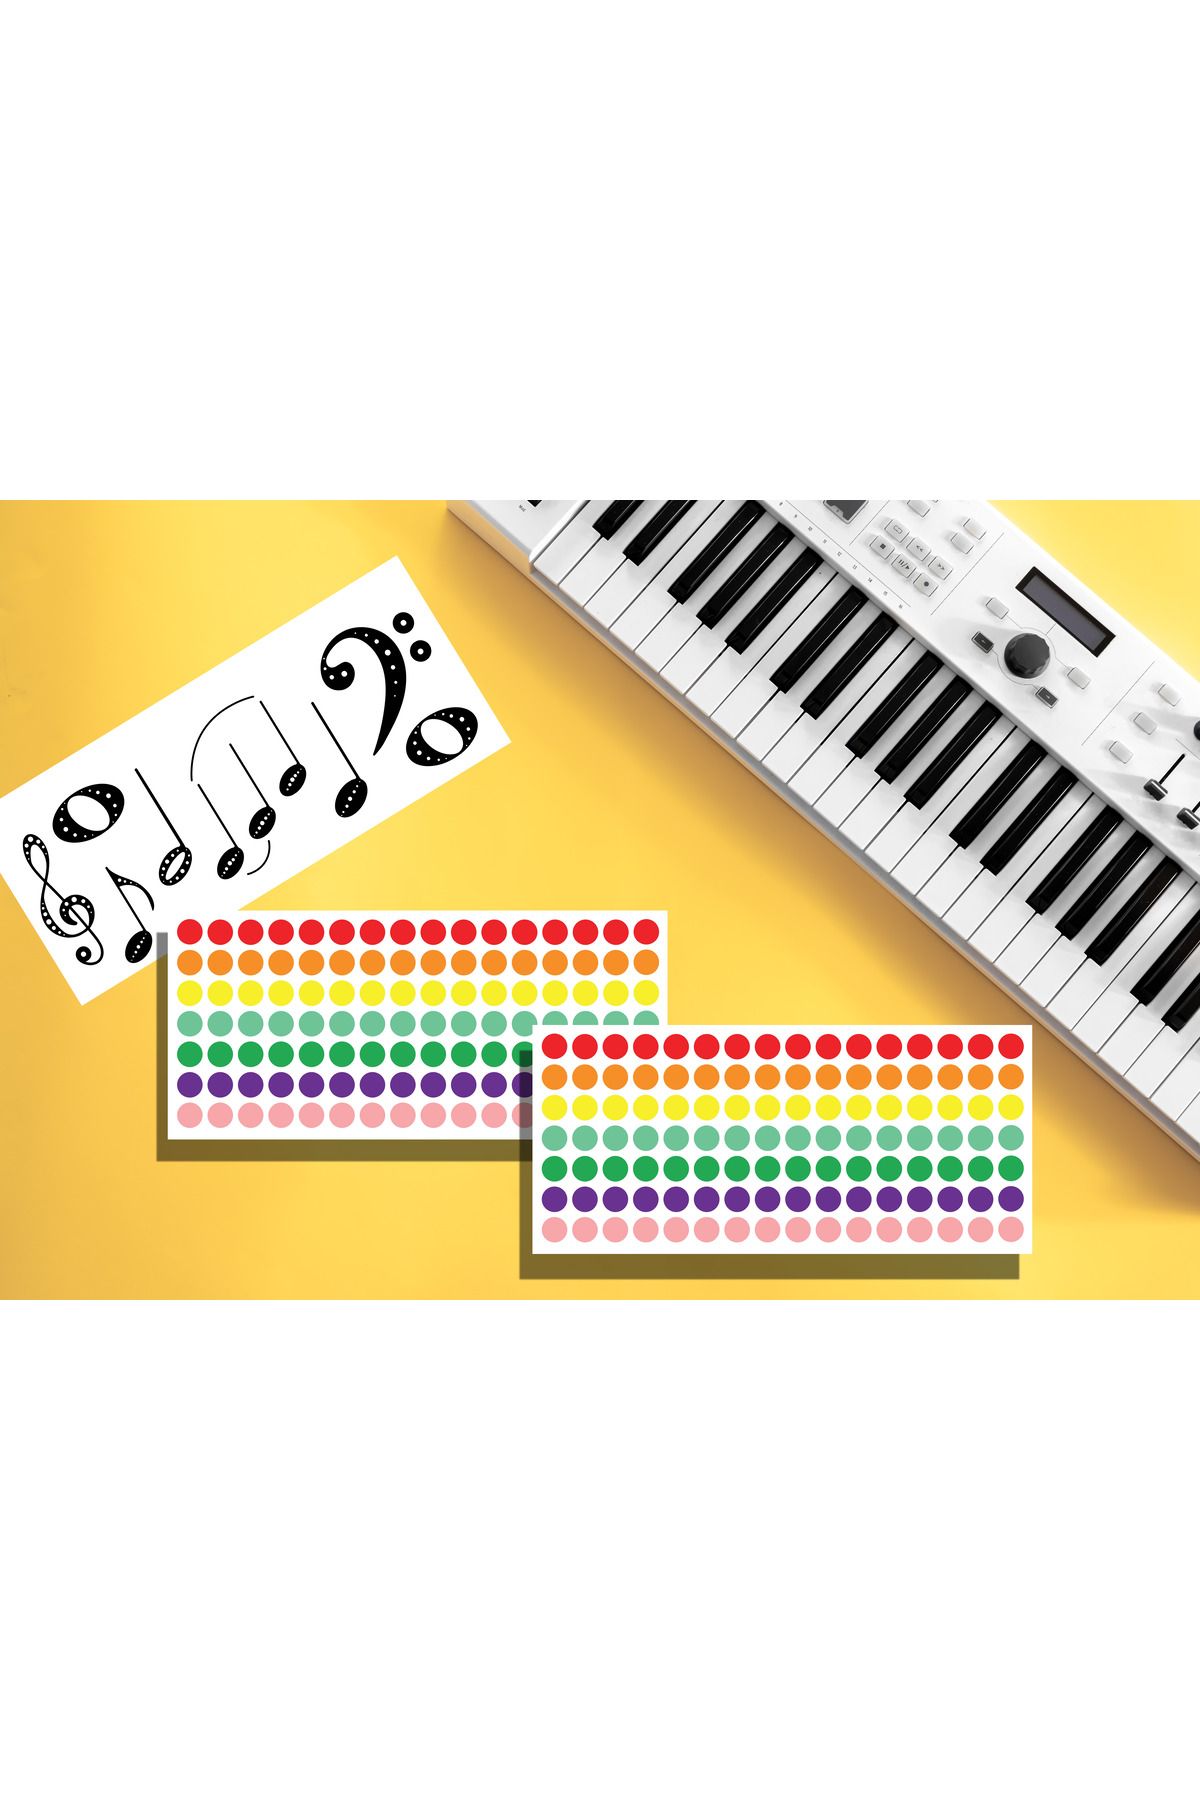 Pink Swan Craft Piyano Org Klavye Akordiyon Melodika Piano Tuşları Yazısız Sticker Etiketi 232 Adet